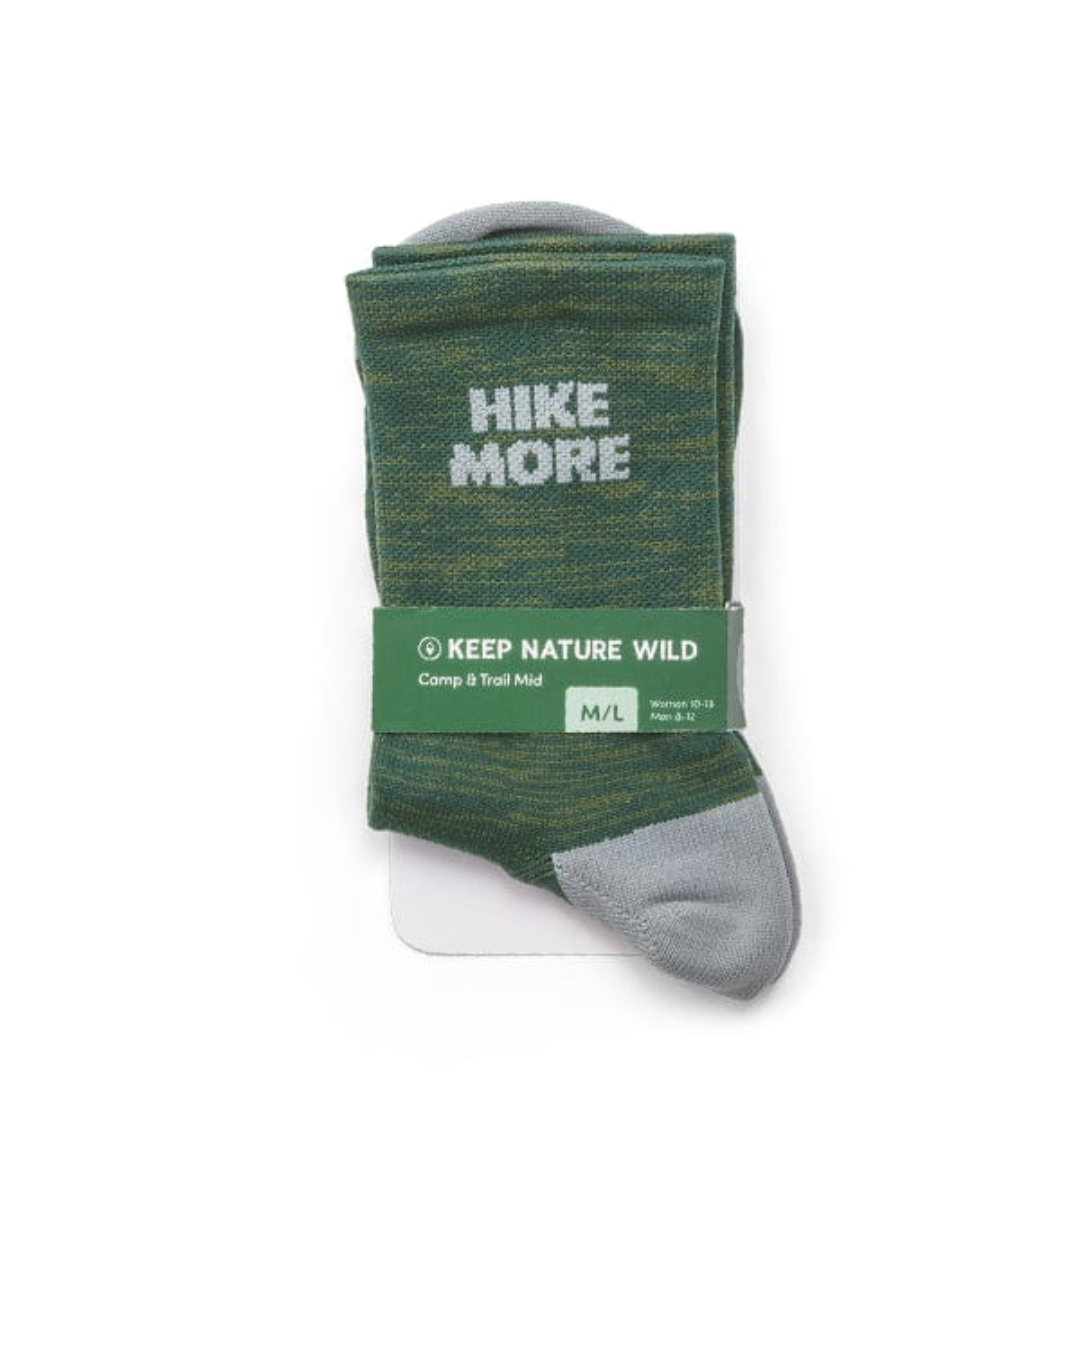 Keep Nature Wild Camp & Trail Mid Socks - Hike More